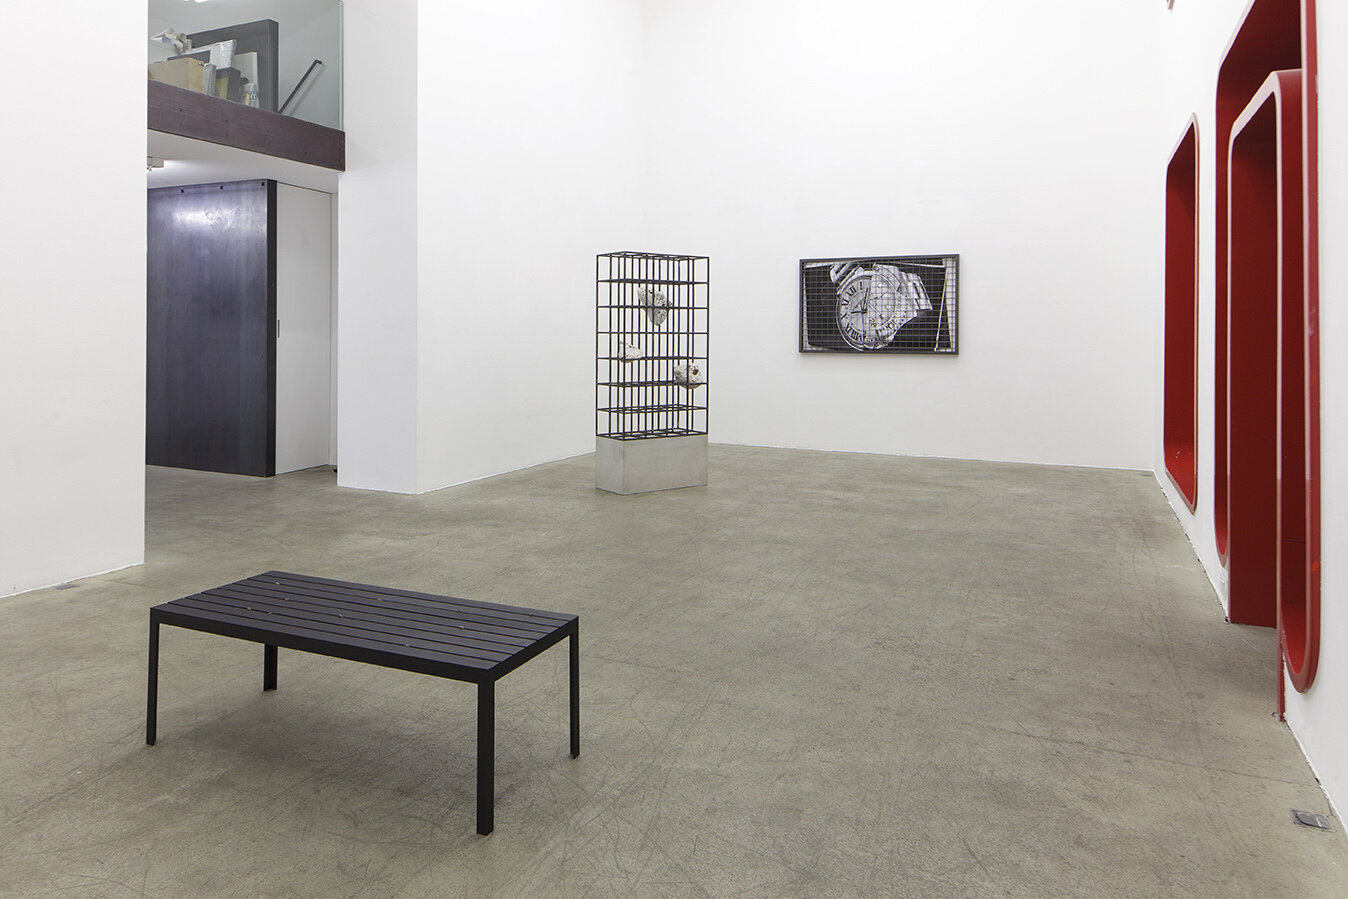 Galerie+Johann+Widauer-Exhibition-2015-Sunah-Choi-02.jpg